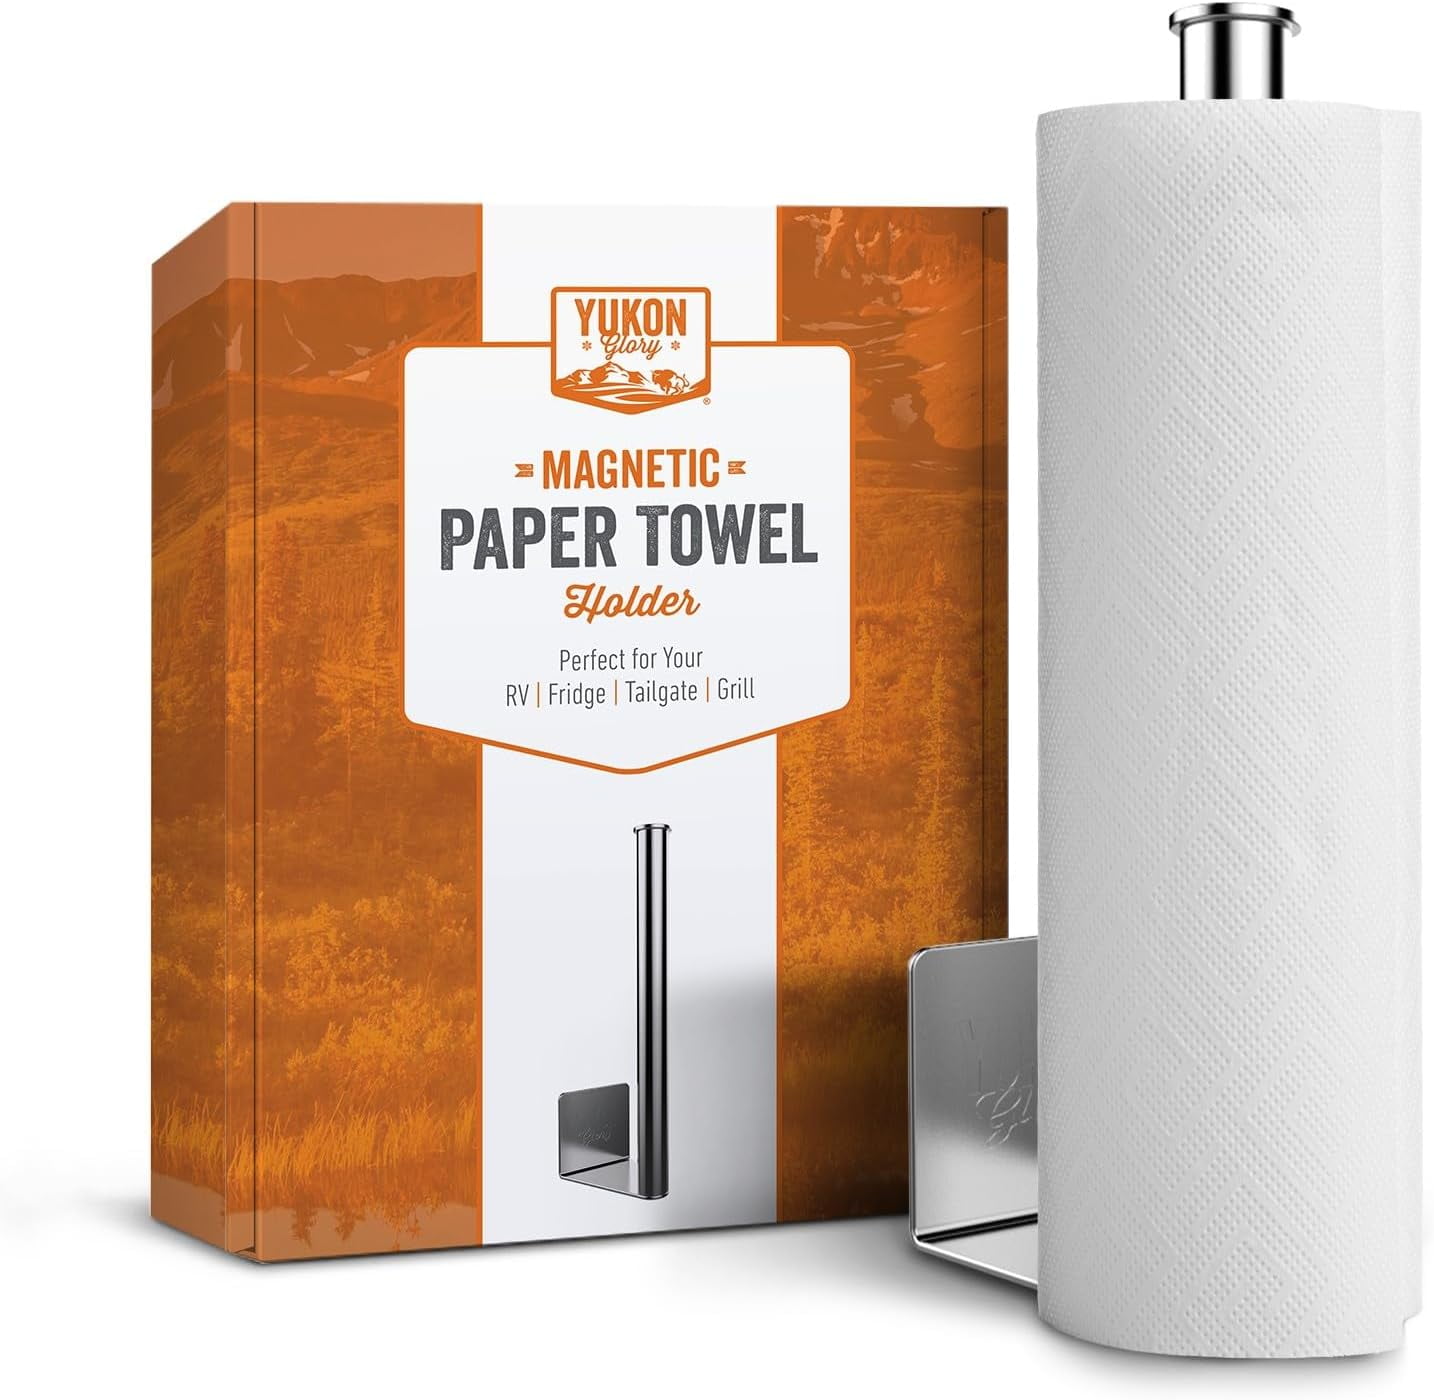 GOODBUY Paper Towel Holder, One- Handed Operation Paper Towel Holder Stand,  304 Stainless Steel Paper Towel Holder, Tension Arm Paper Towel Holder